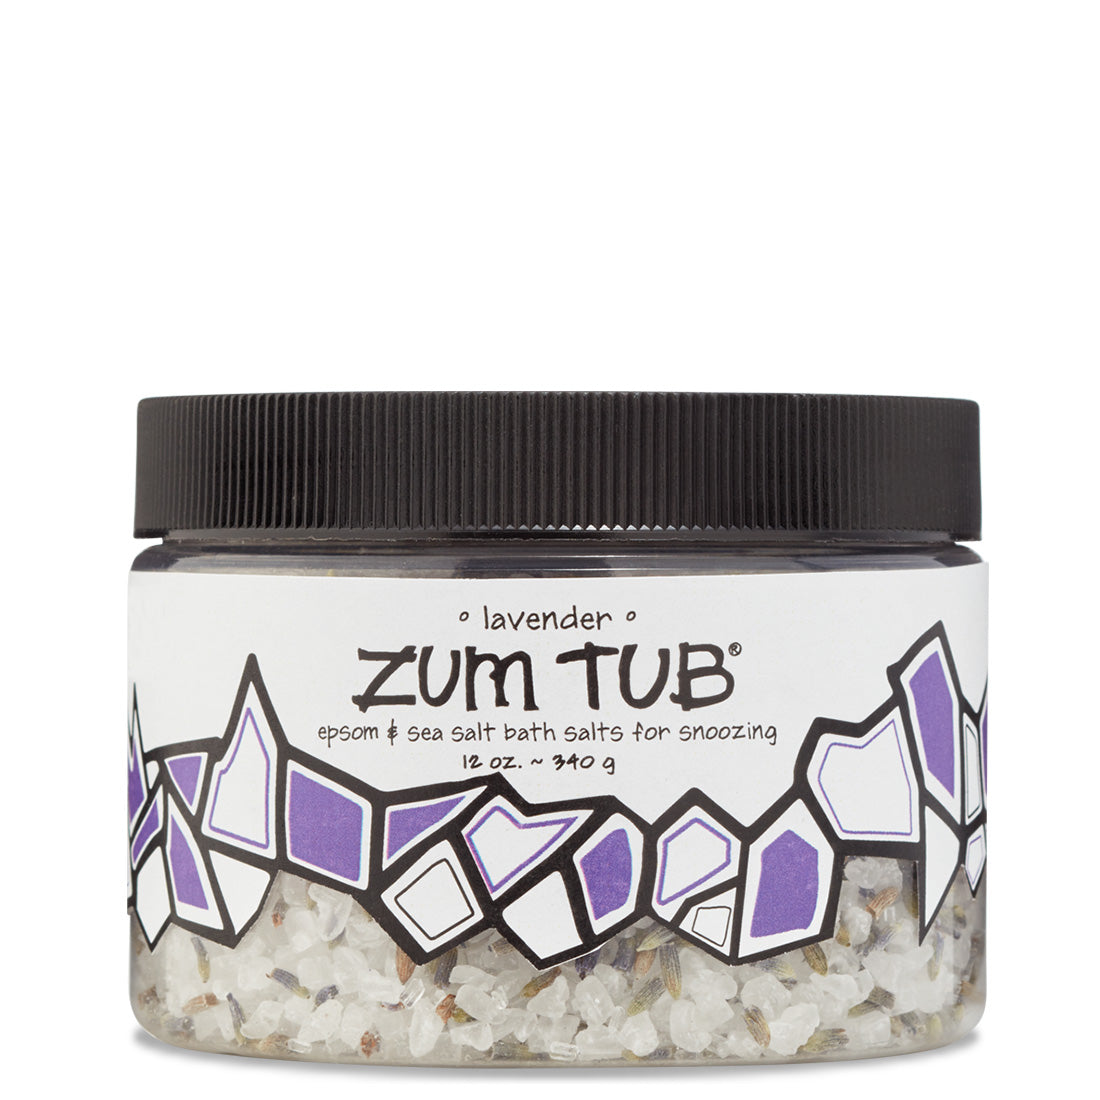 12 oz clear plastic jar with black lid filled with lavender bath salts